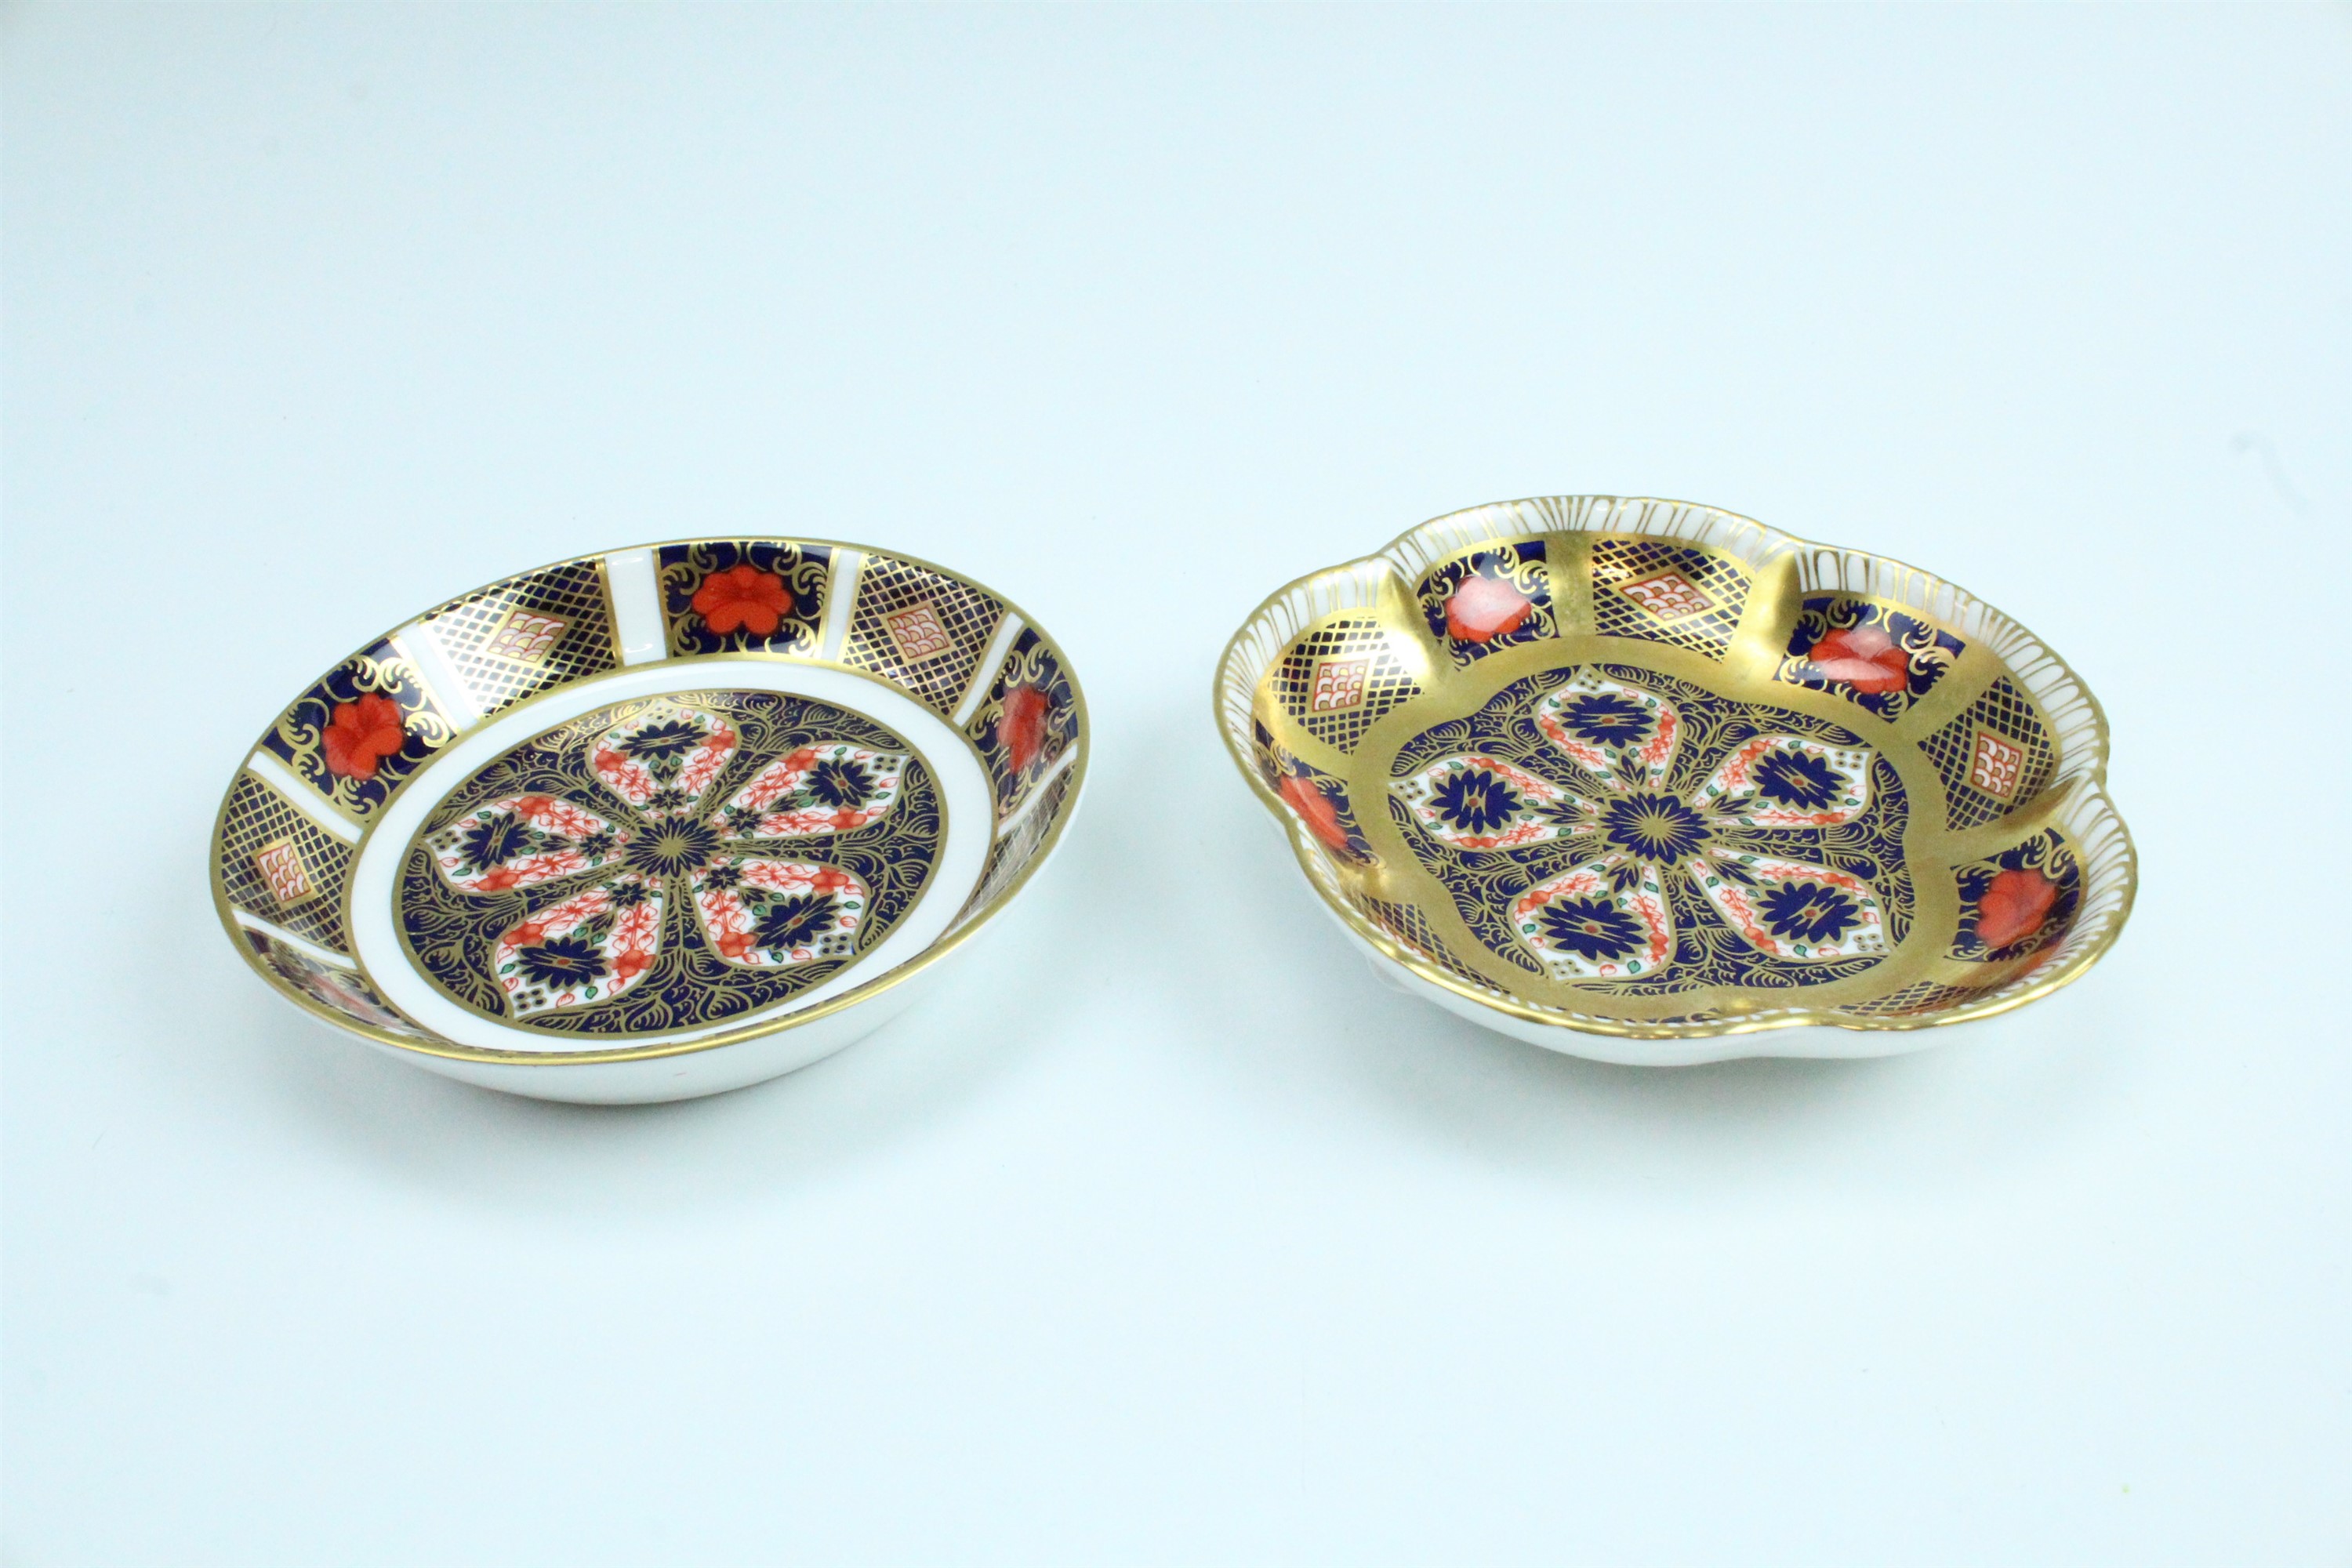 Two modern Royal Crown Derby Old Imari dishes, pattern No. 1128, largest 11.5 cm diameter